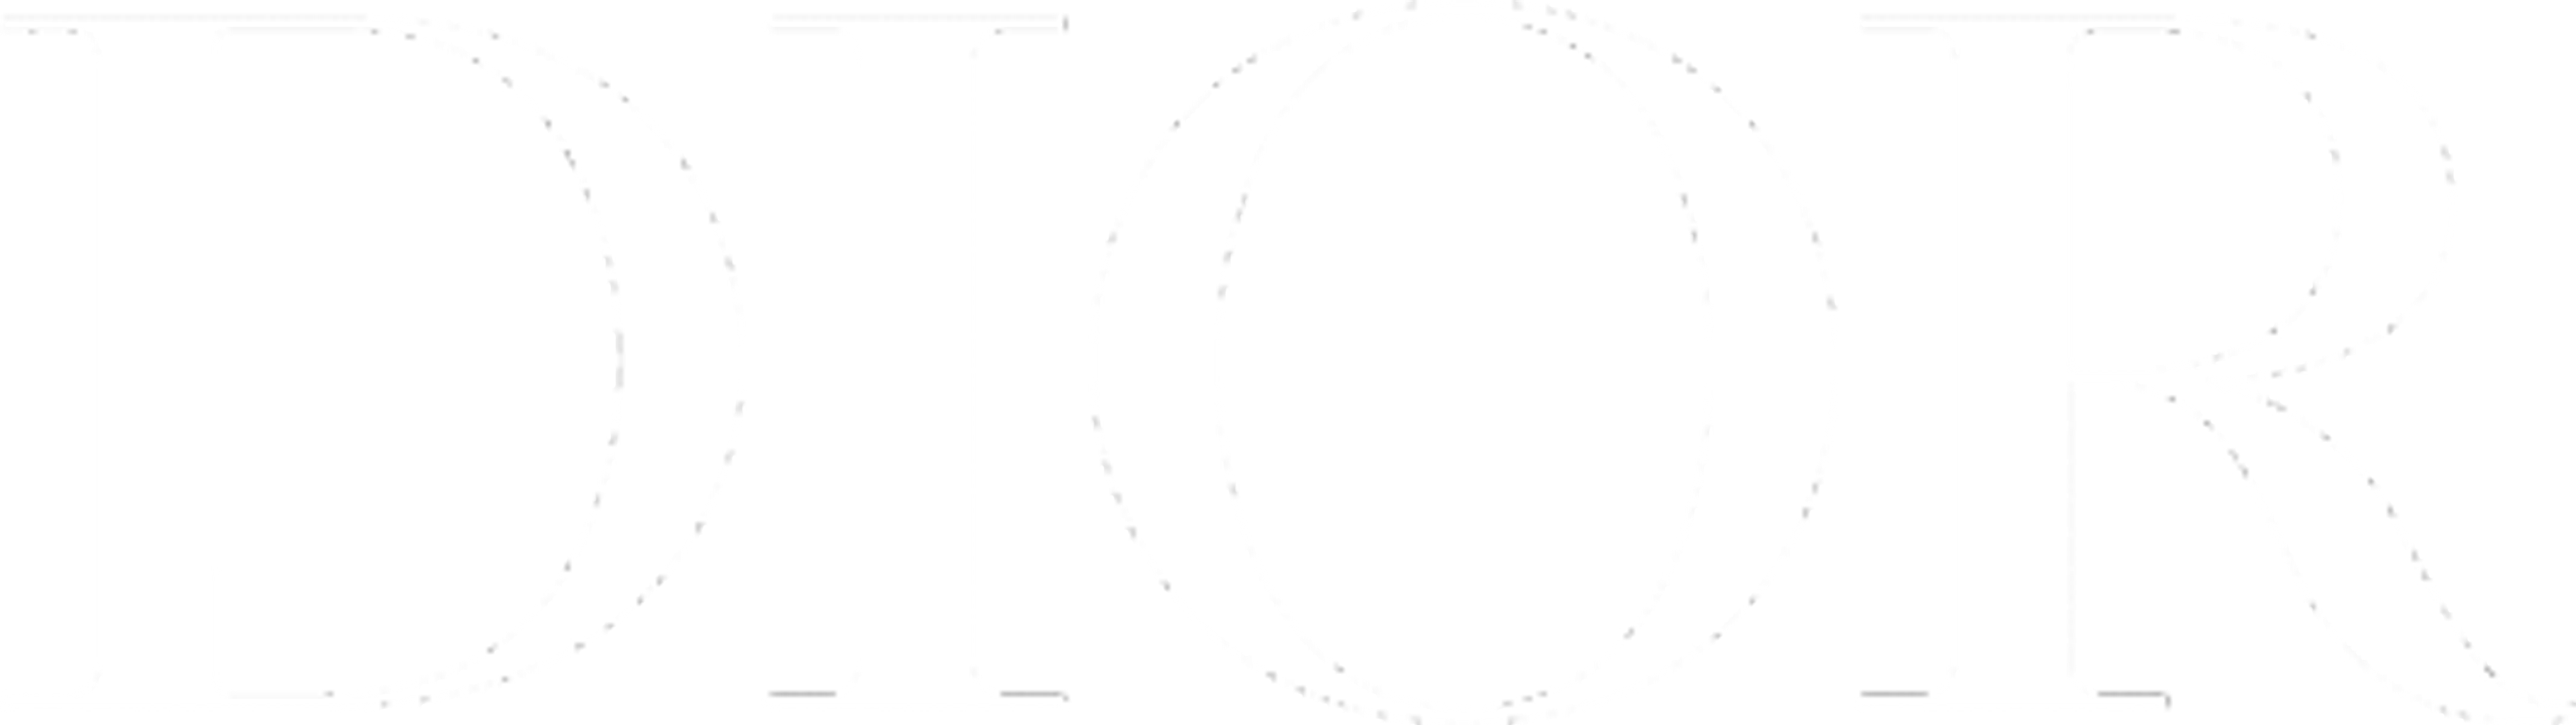 Logo: Dior